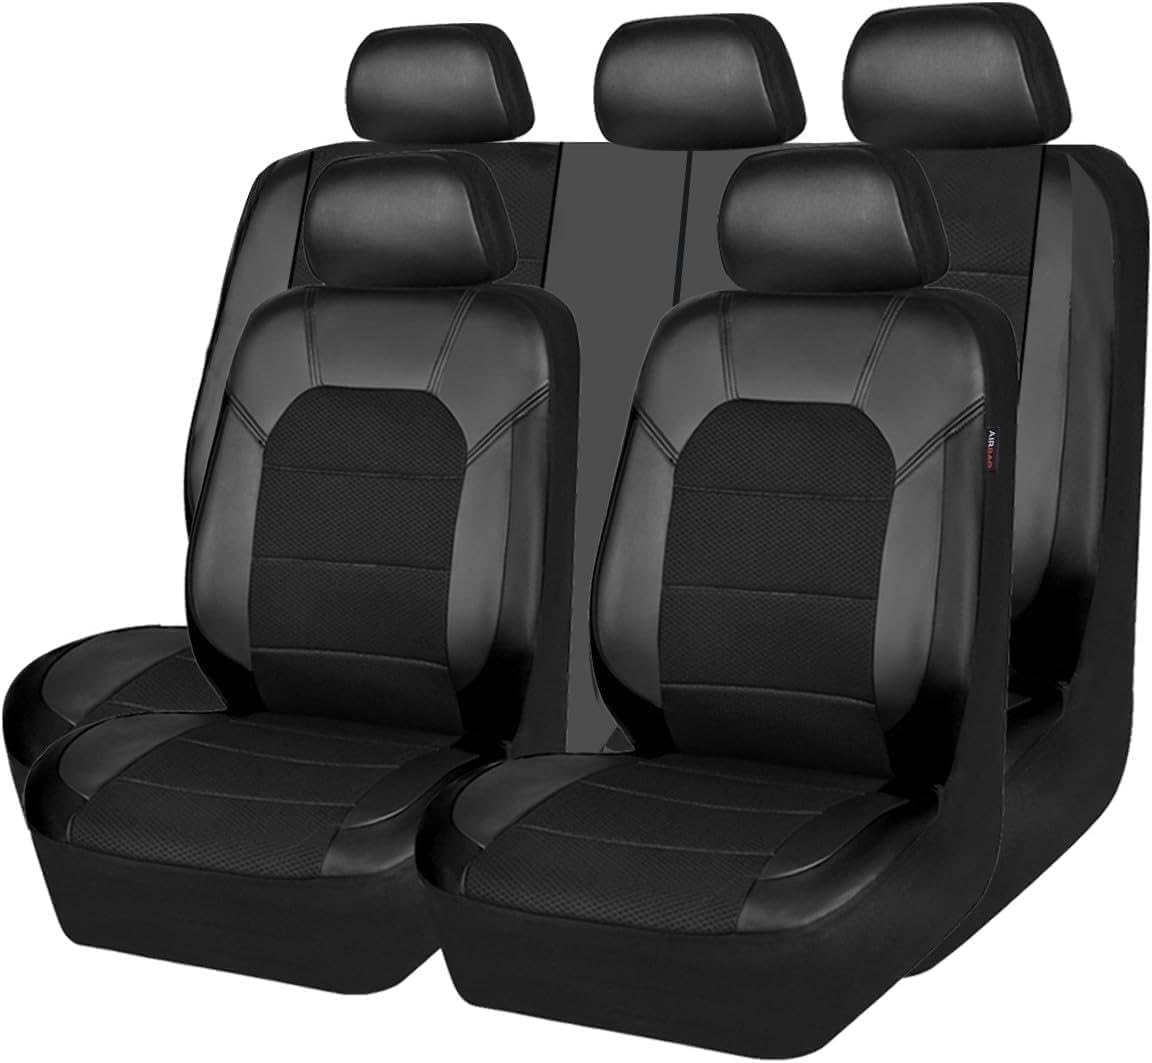 JOSKAA Autositzbezüge Universal passend für Mercedes Benz W204 W211 W210 W124 W212 W202 W245 W163 Cla Gls Gla Glc A/B/C/E Klasse Sitzbezug-Sets von JOSKAA